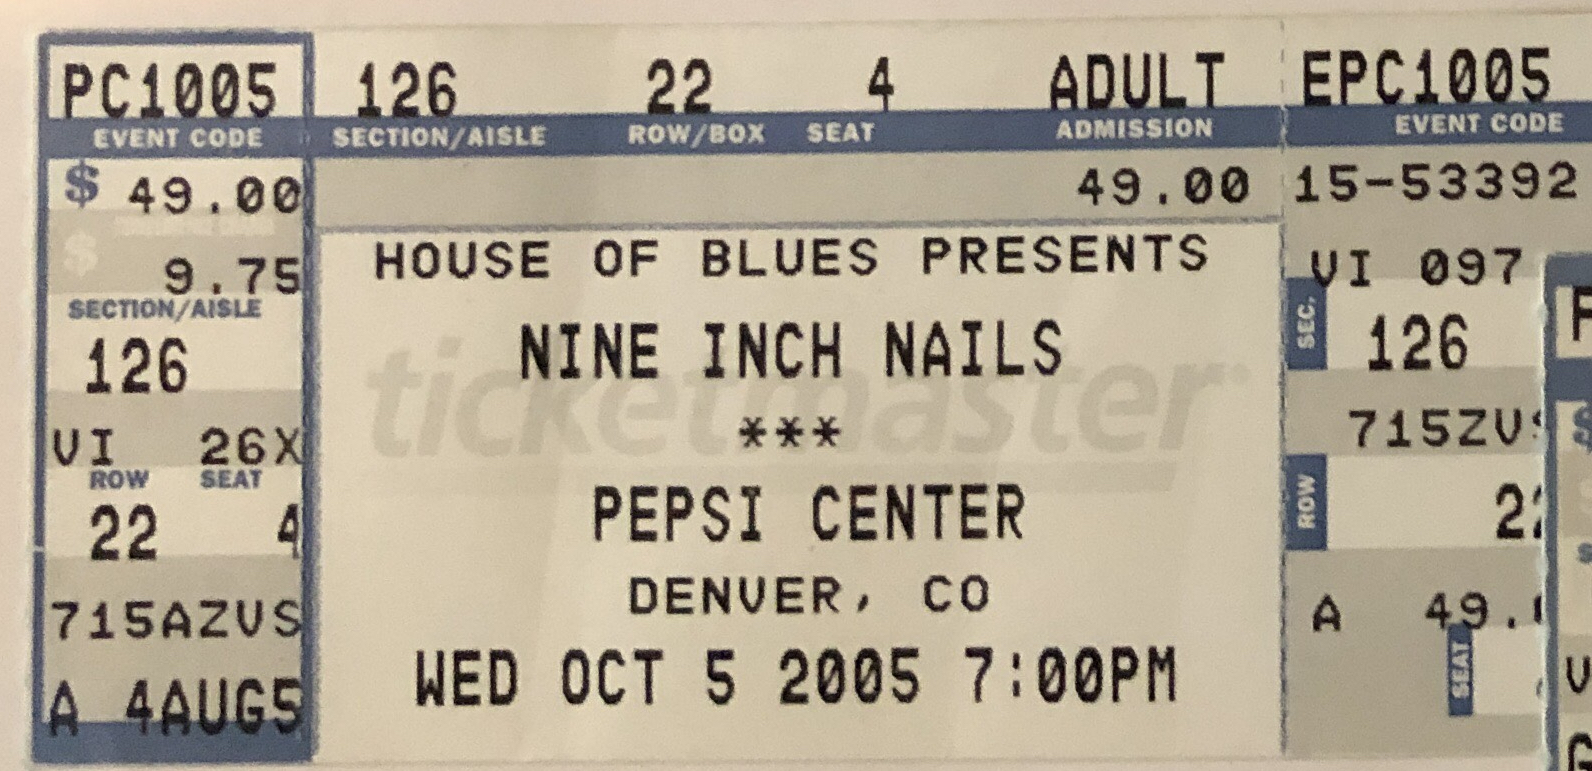 2005/10/05 Ticket